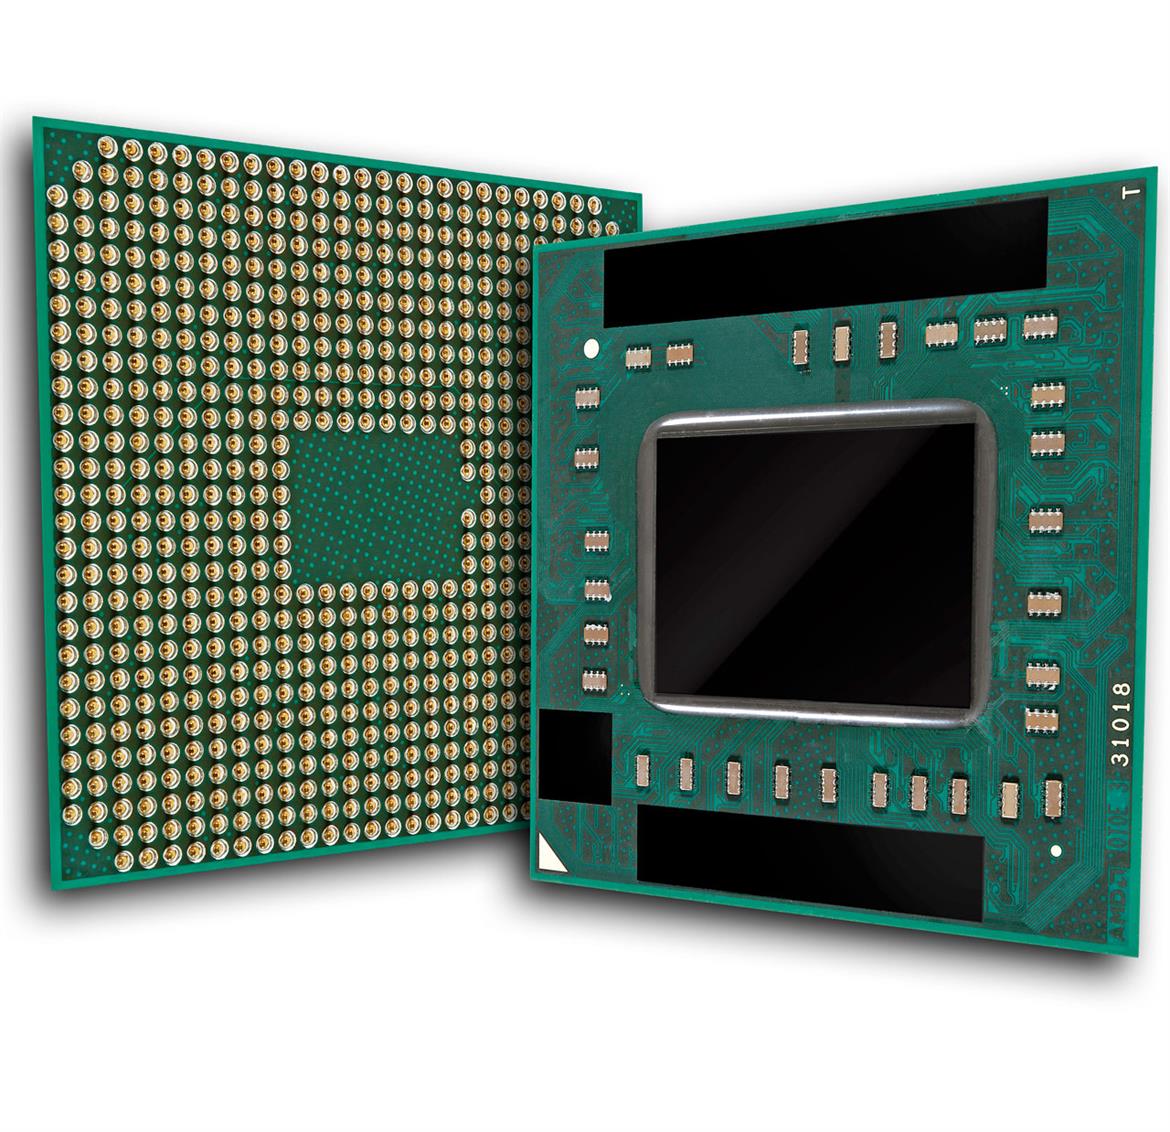 AMD Trinity A10-4600M Processor Review